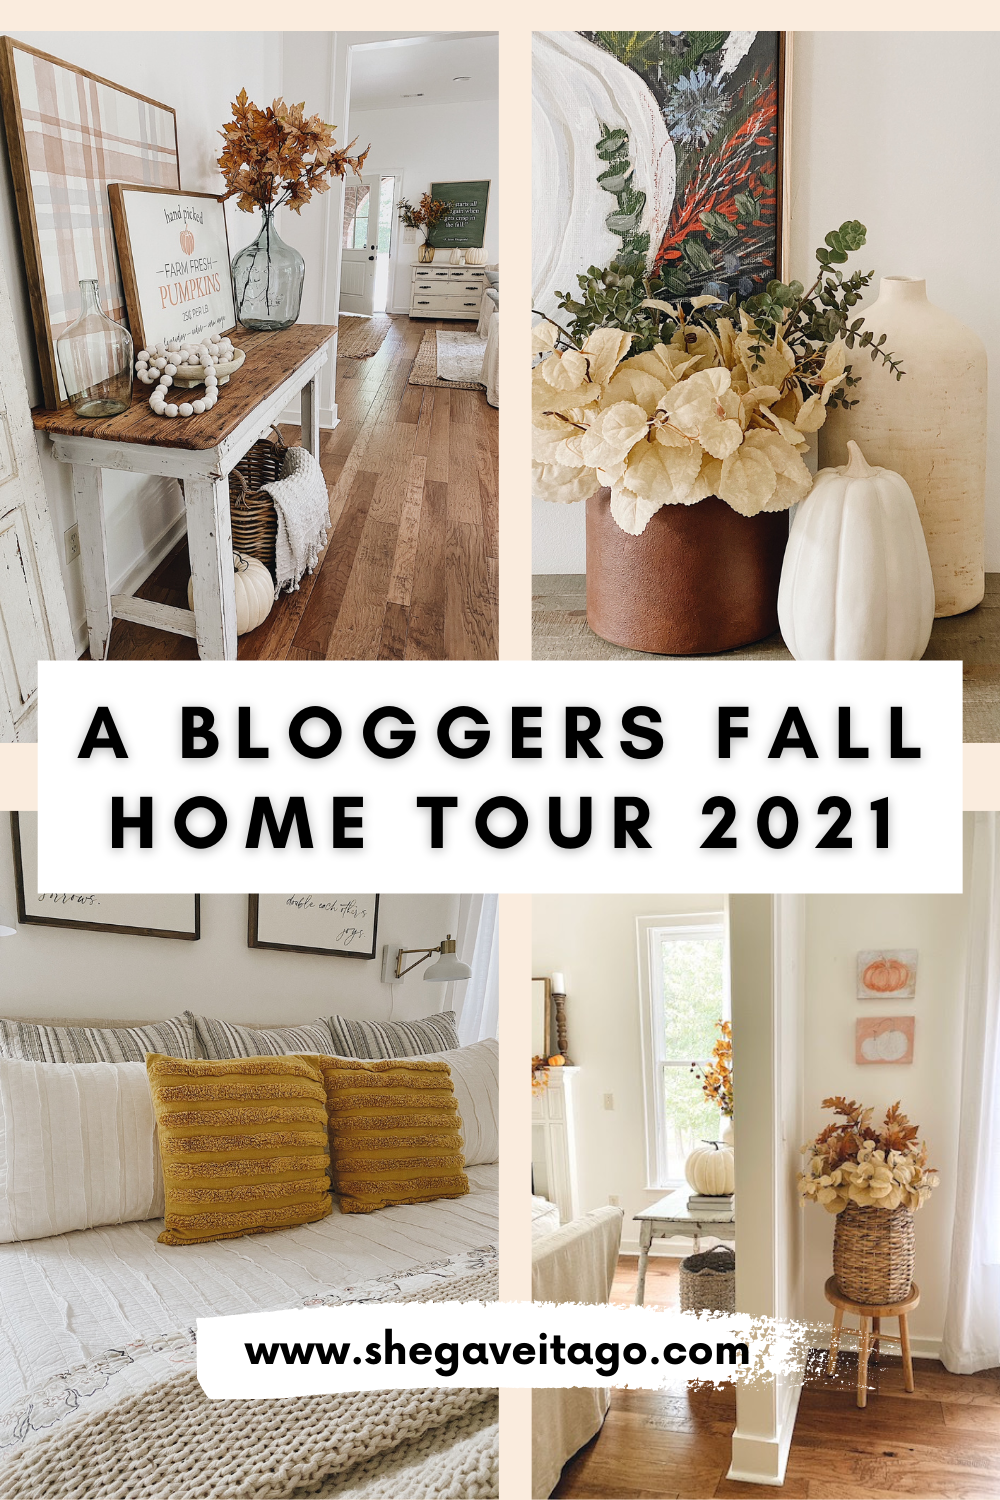 Fall Home Tour 2021 presentado por la mejor bloguera hogareña de AL, She Gave It A Go